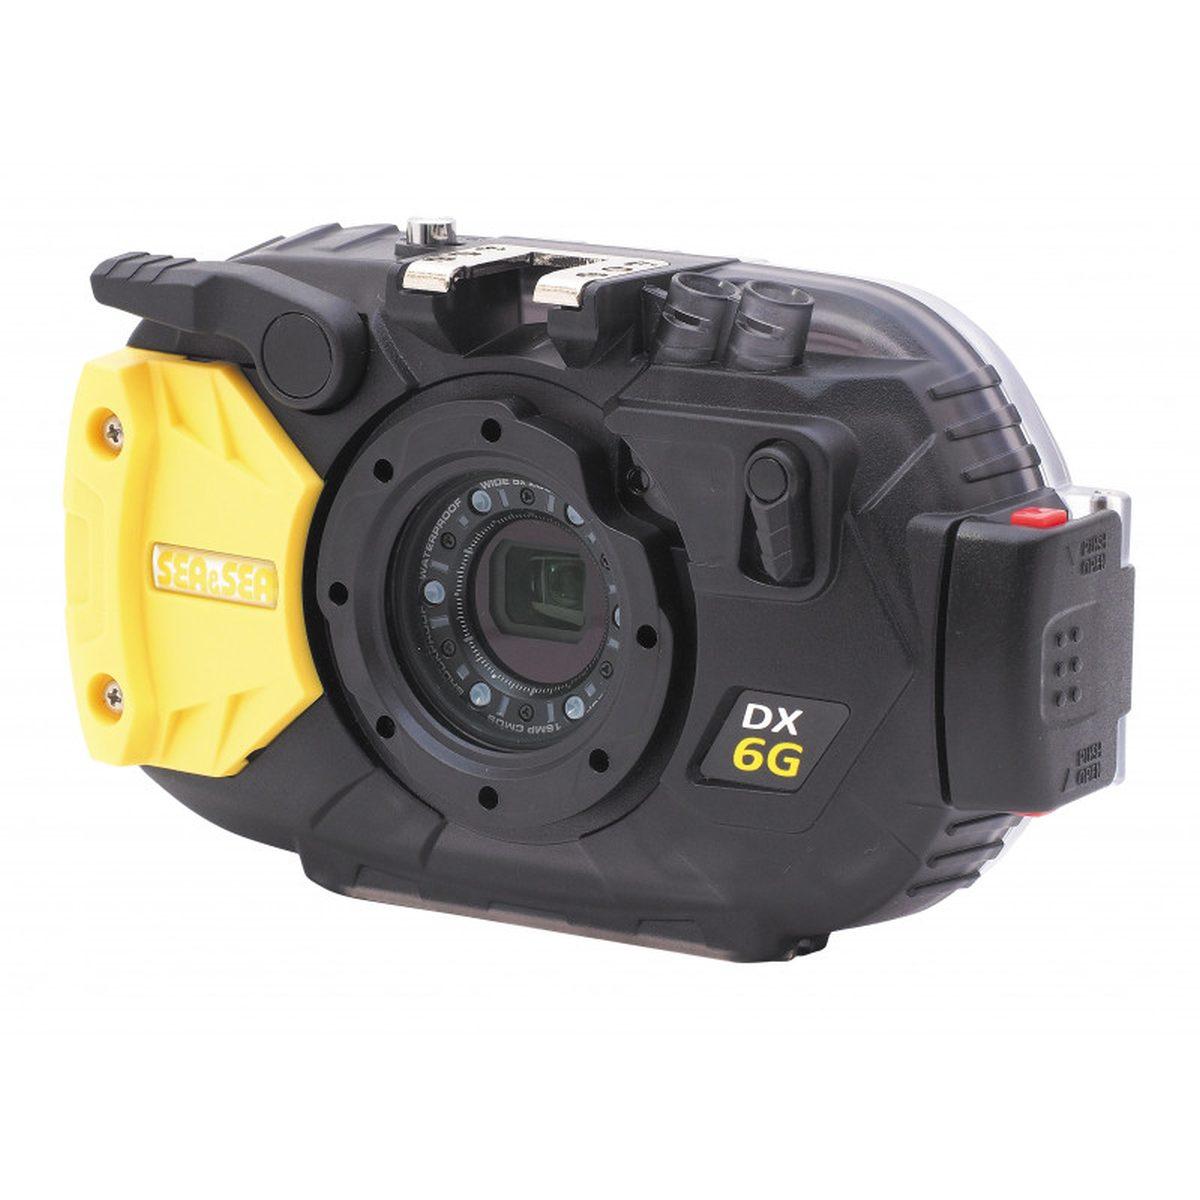 Dx-6g set fotocamera + costodia